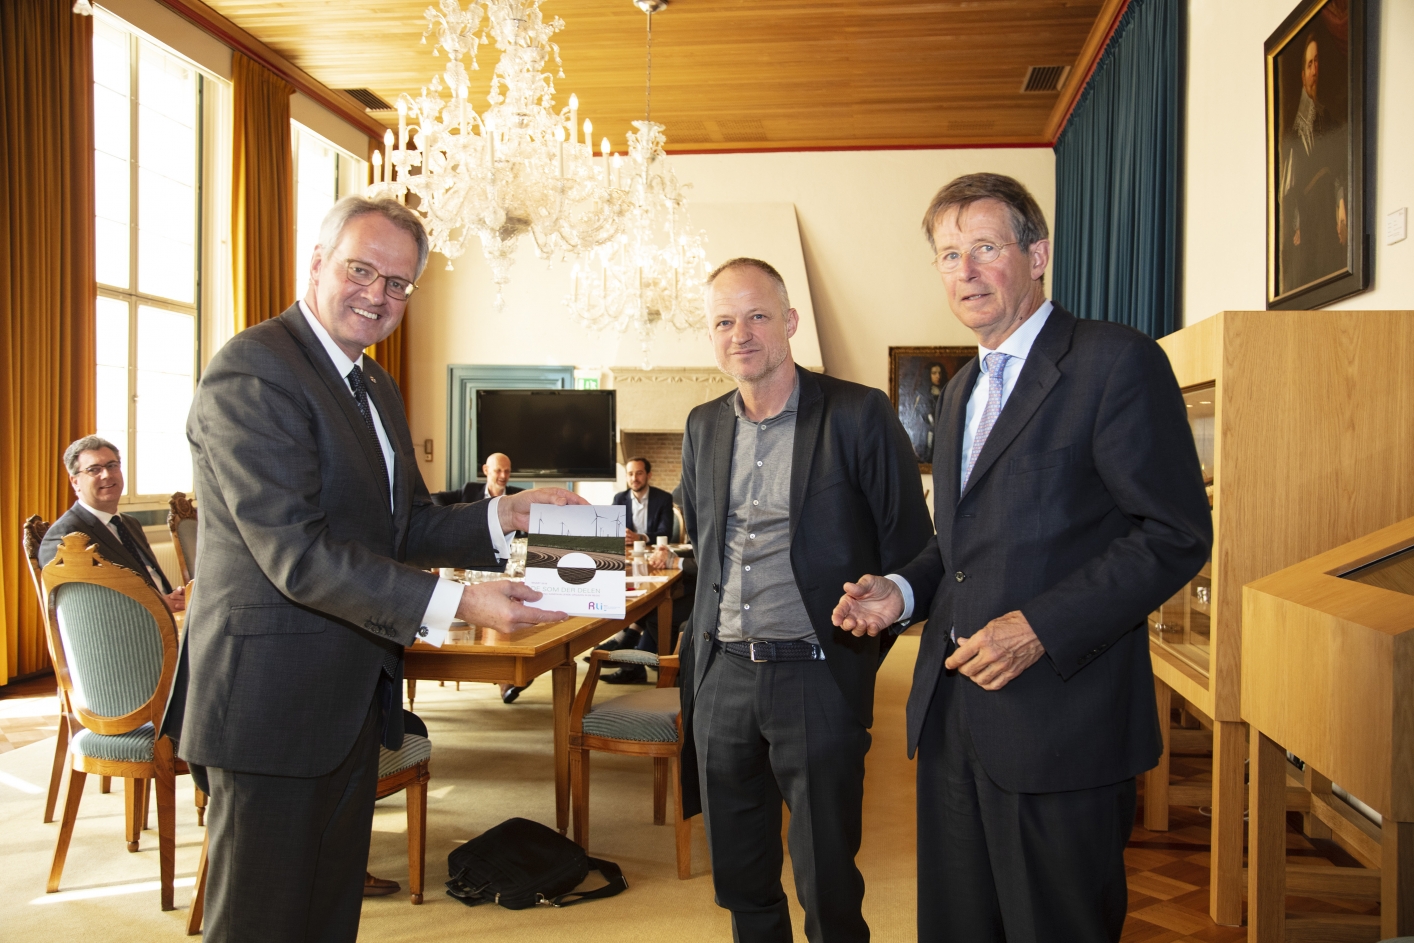 Commissaris van de Koning van provincie Zeeland, Han Polman (l), neemt de verkenning in ontvangst met Co Verdaas (m) raadslid, en Jan Jaap de Graeff (r) voorzitter Rli . 